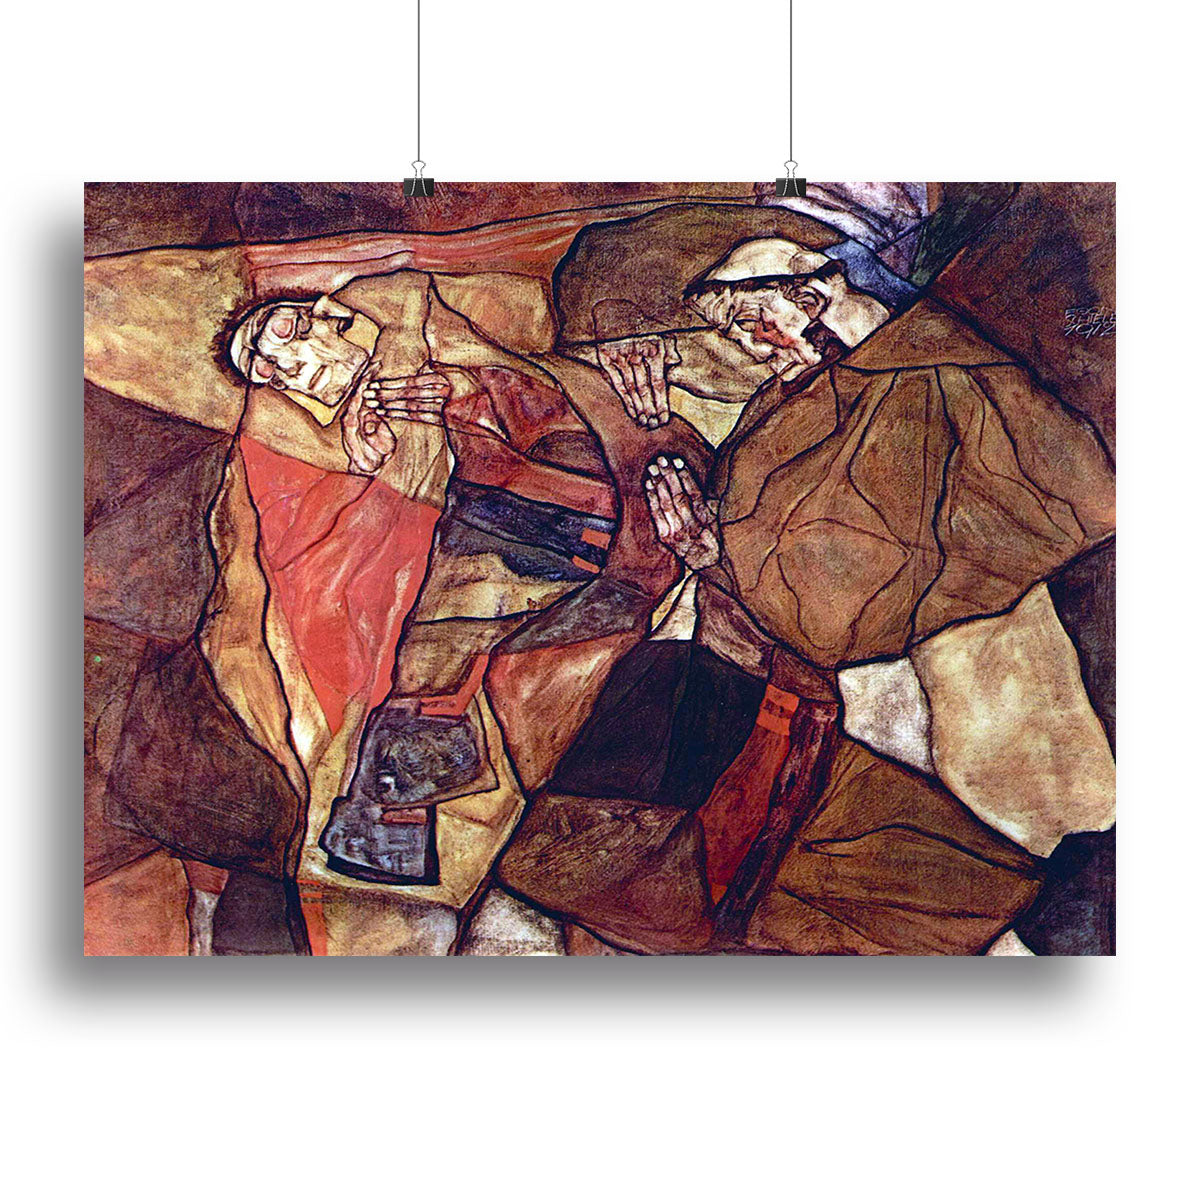 Agony The Death Struggle by Egon Schiele Canvas Print or Poster - Canvas Art Rocks - 2